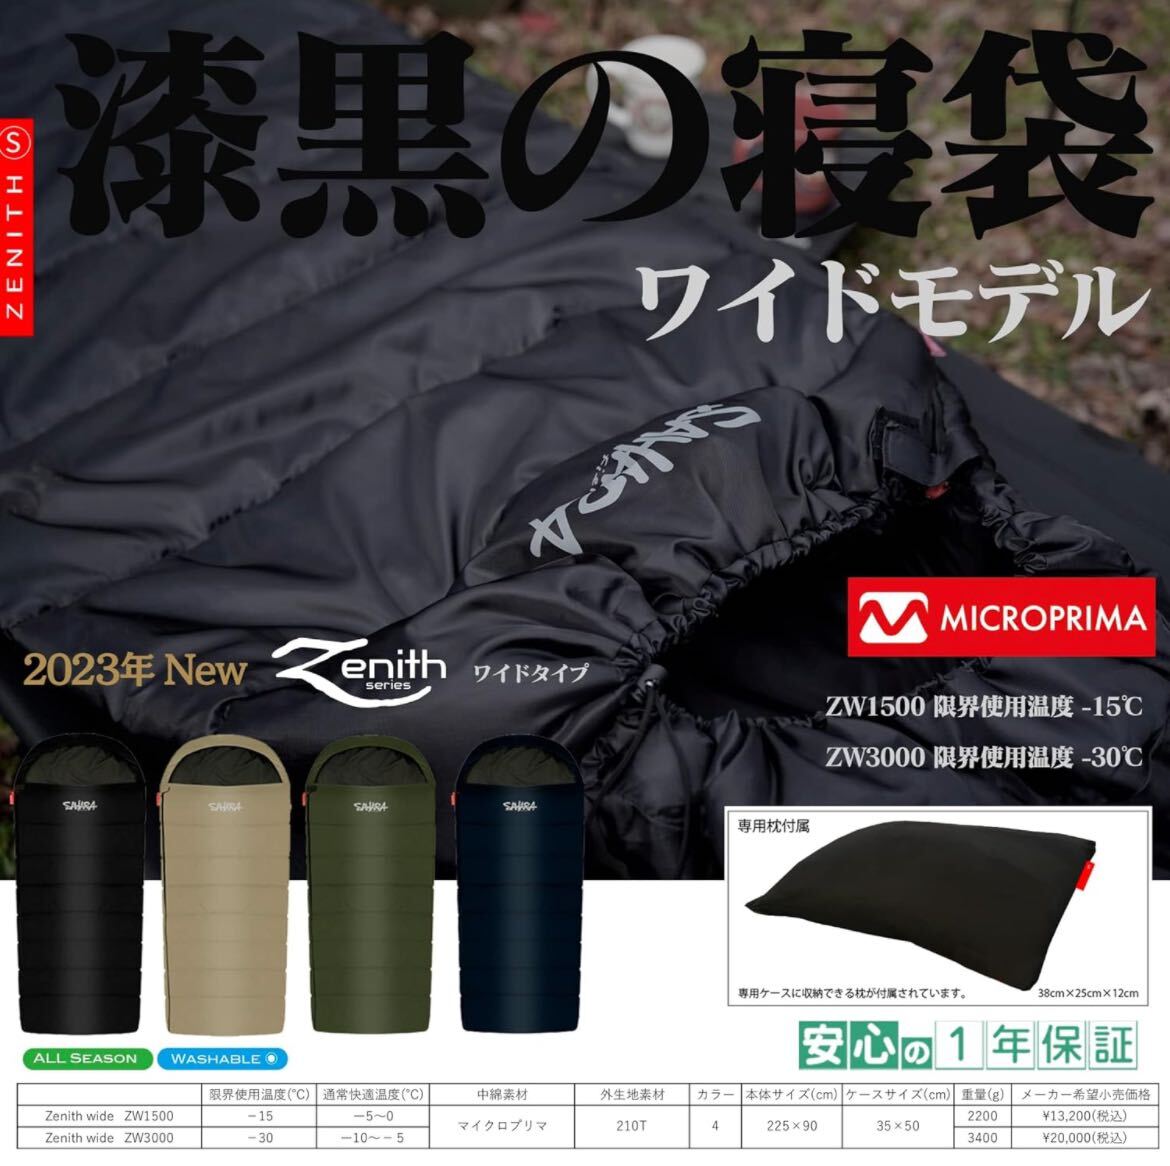 FieldSAHARA (フィールドサハラ) 寝袋 シュラフ 冬用 人工ダウン ワイドサイズ 封筒型 限界温度-15℃ zw1500 ブラックの画像2